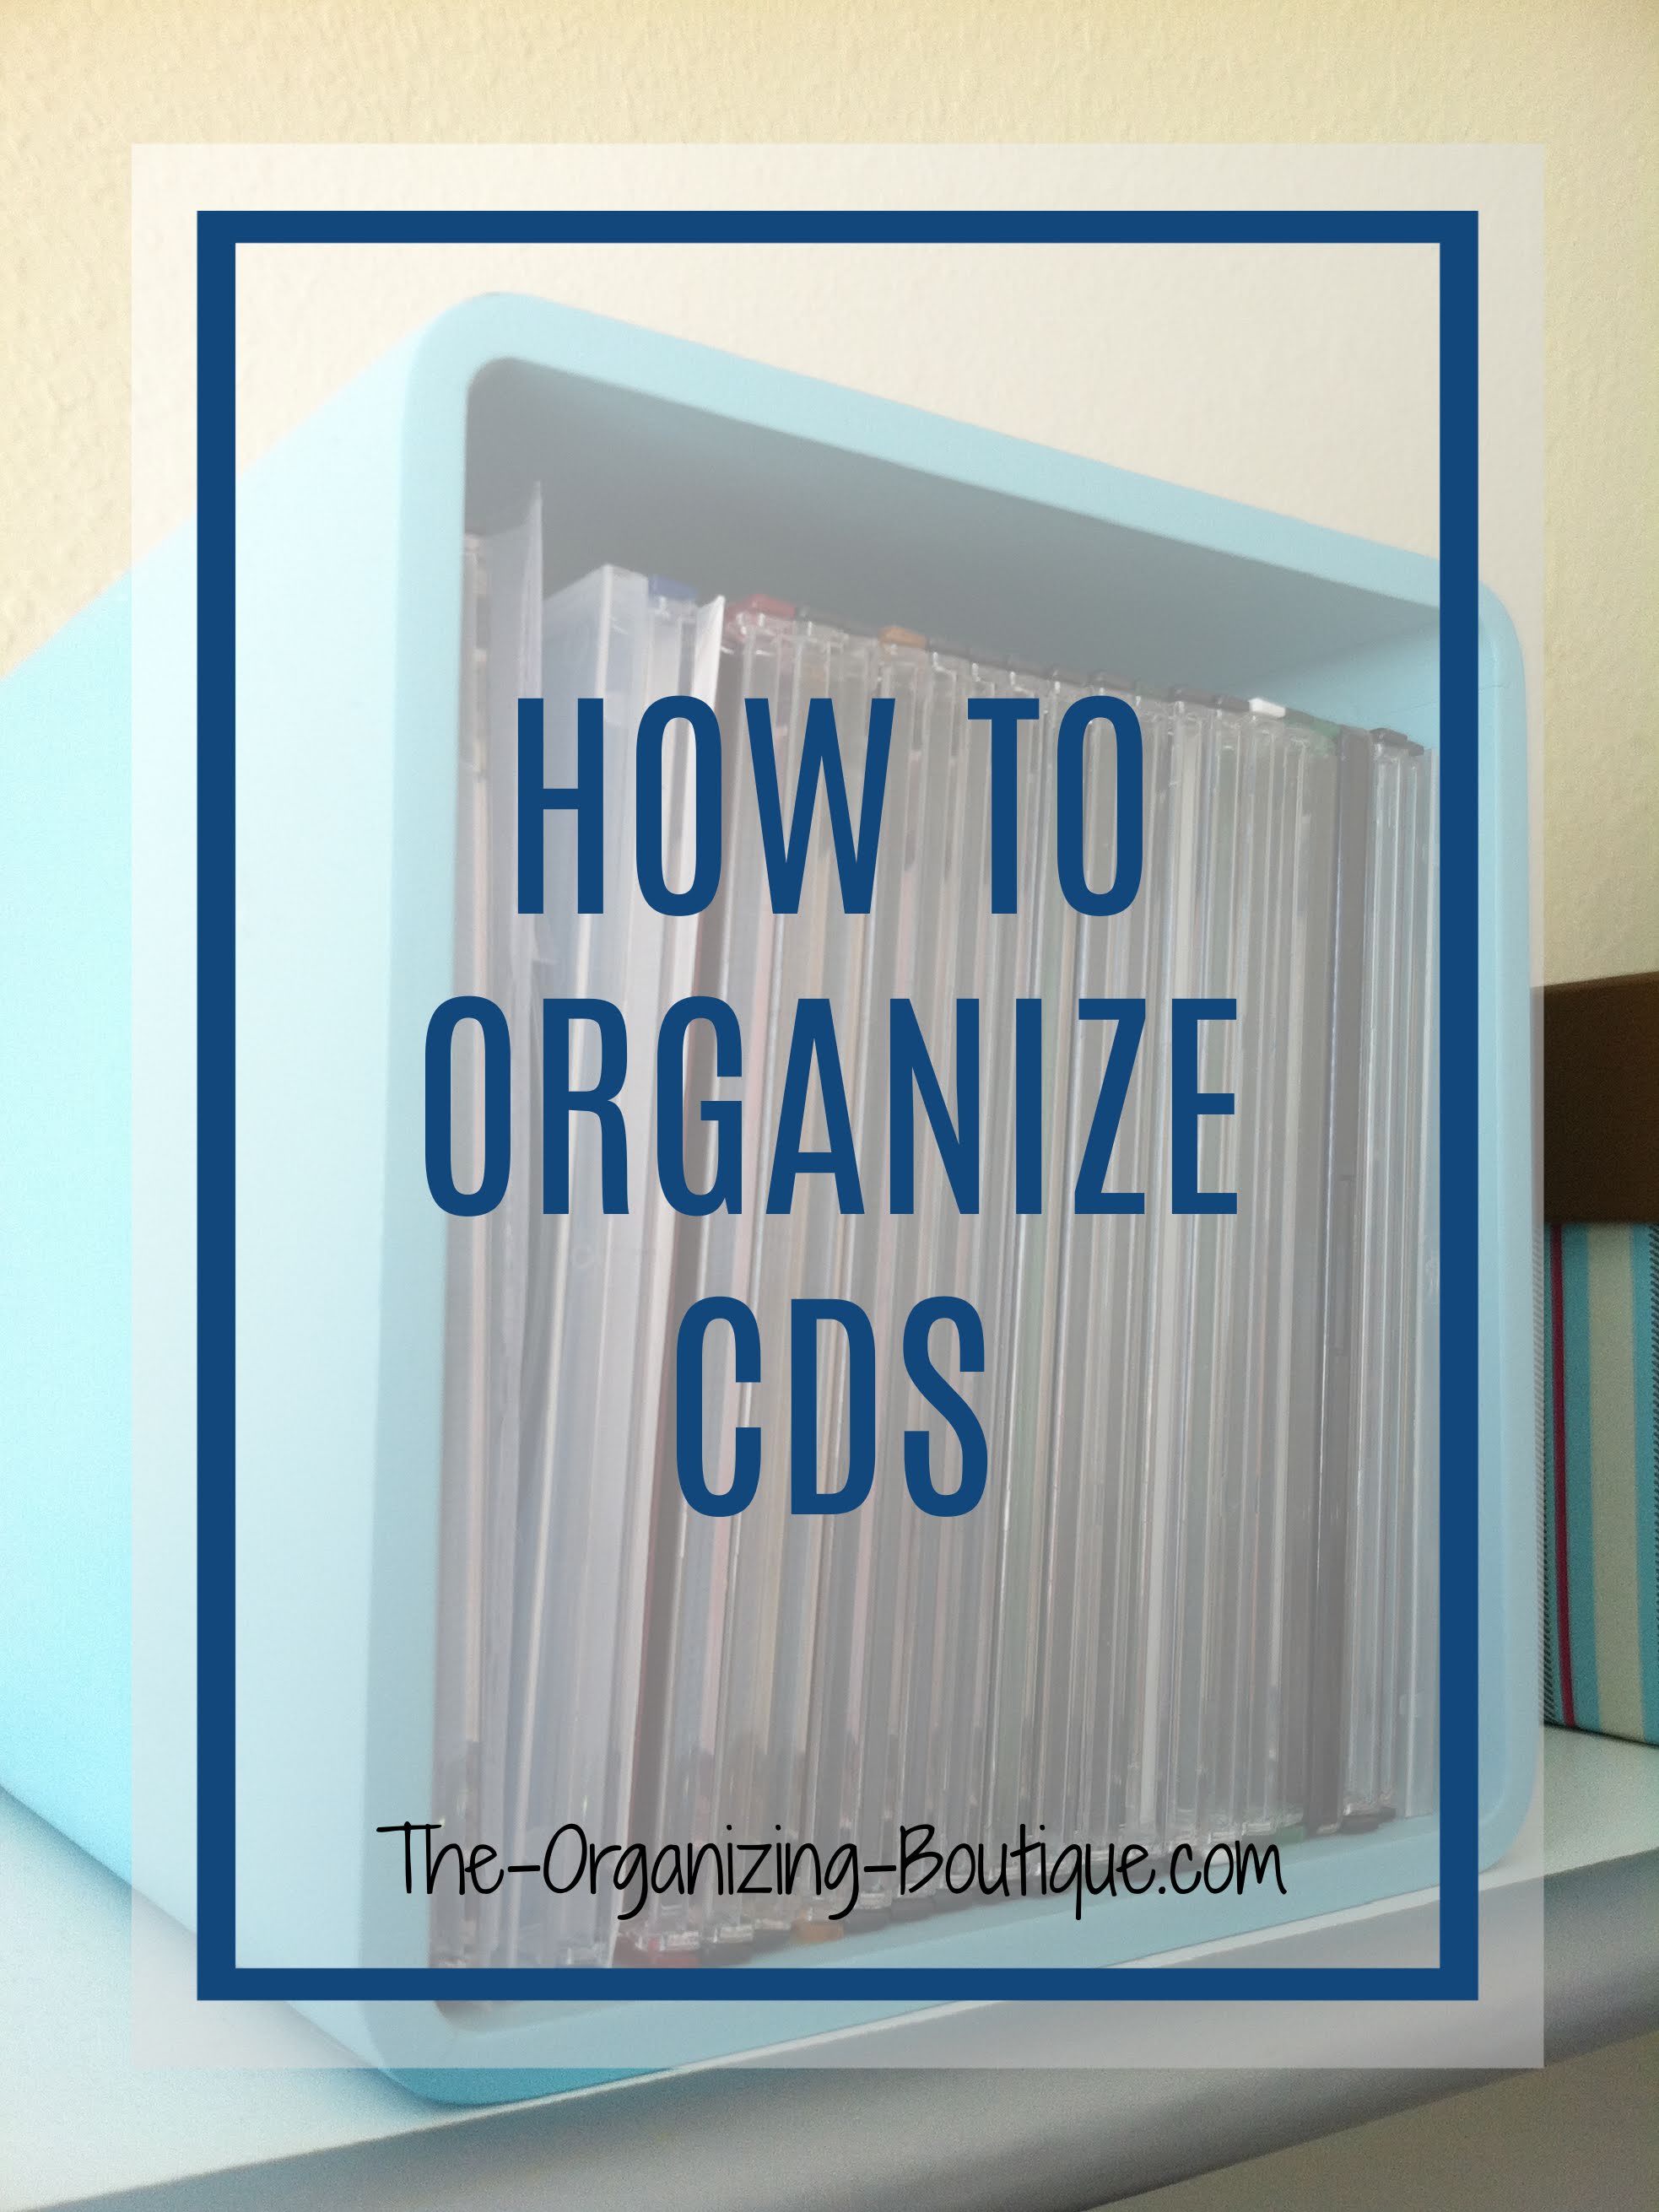 organize cds title